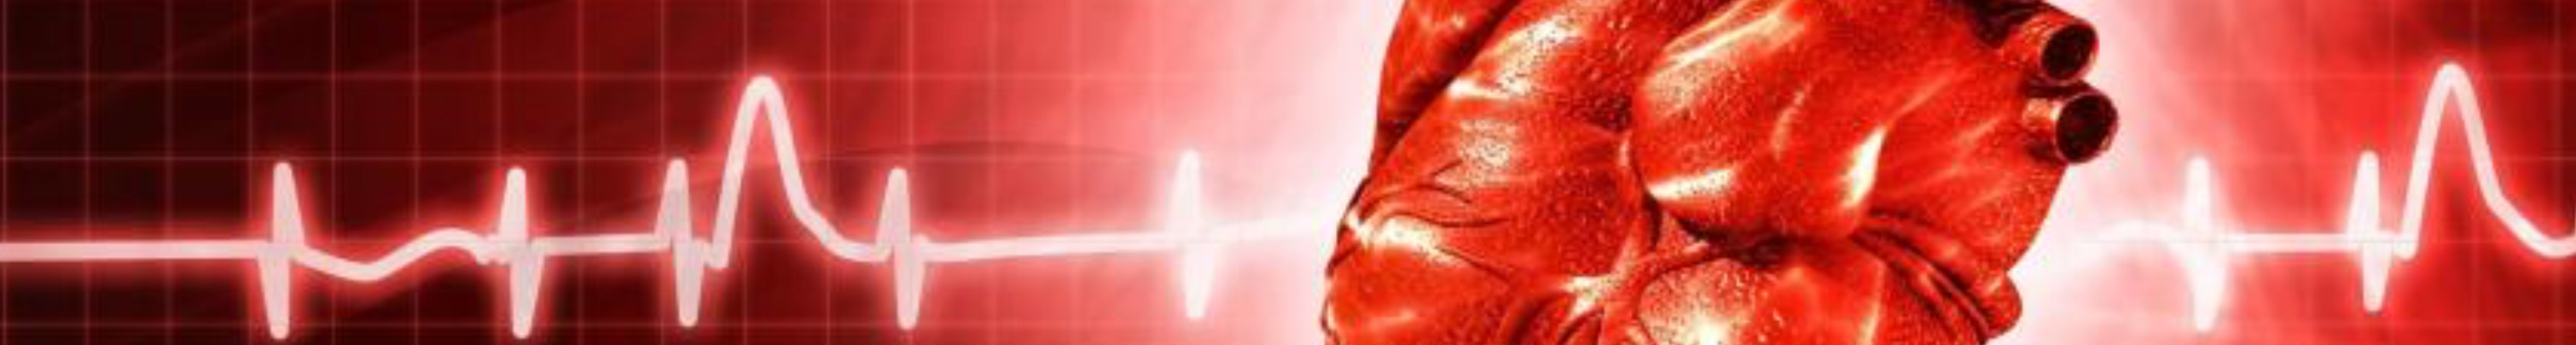 Heart Disease Patients Classification